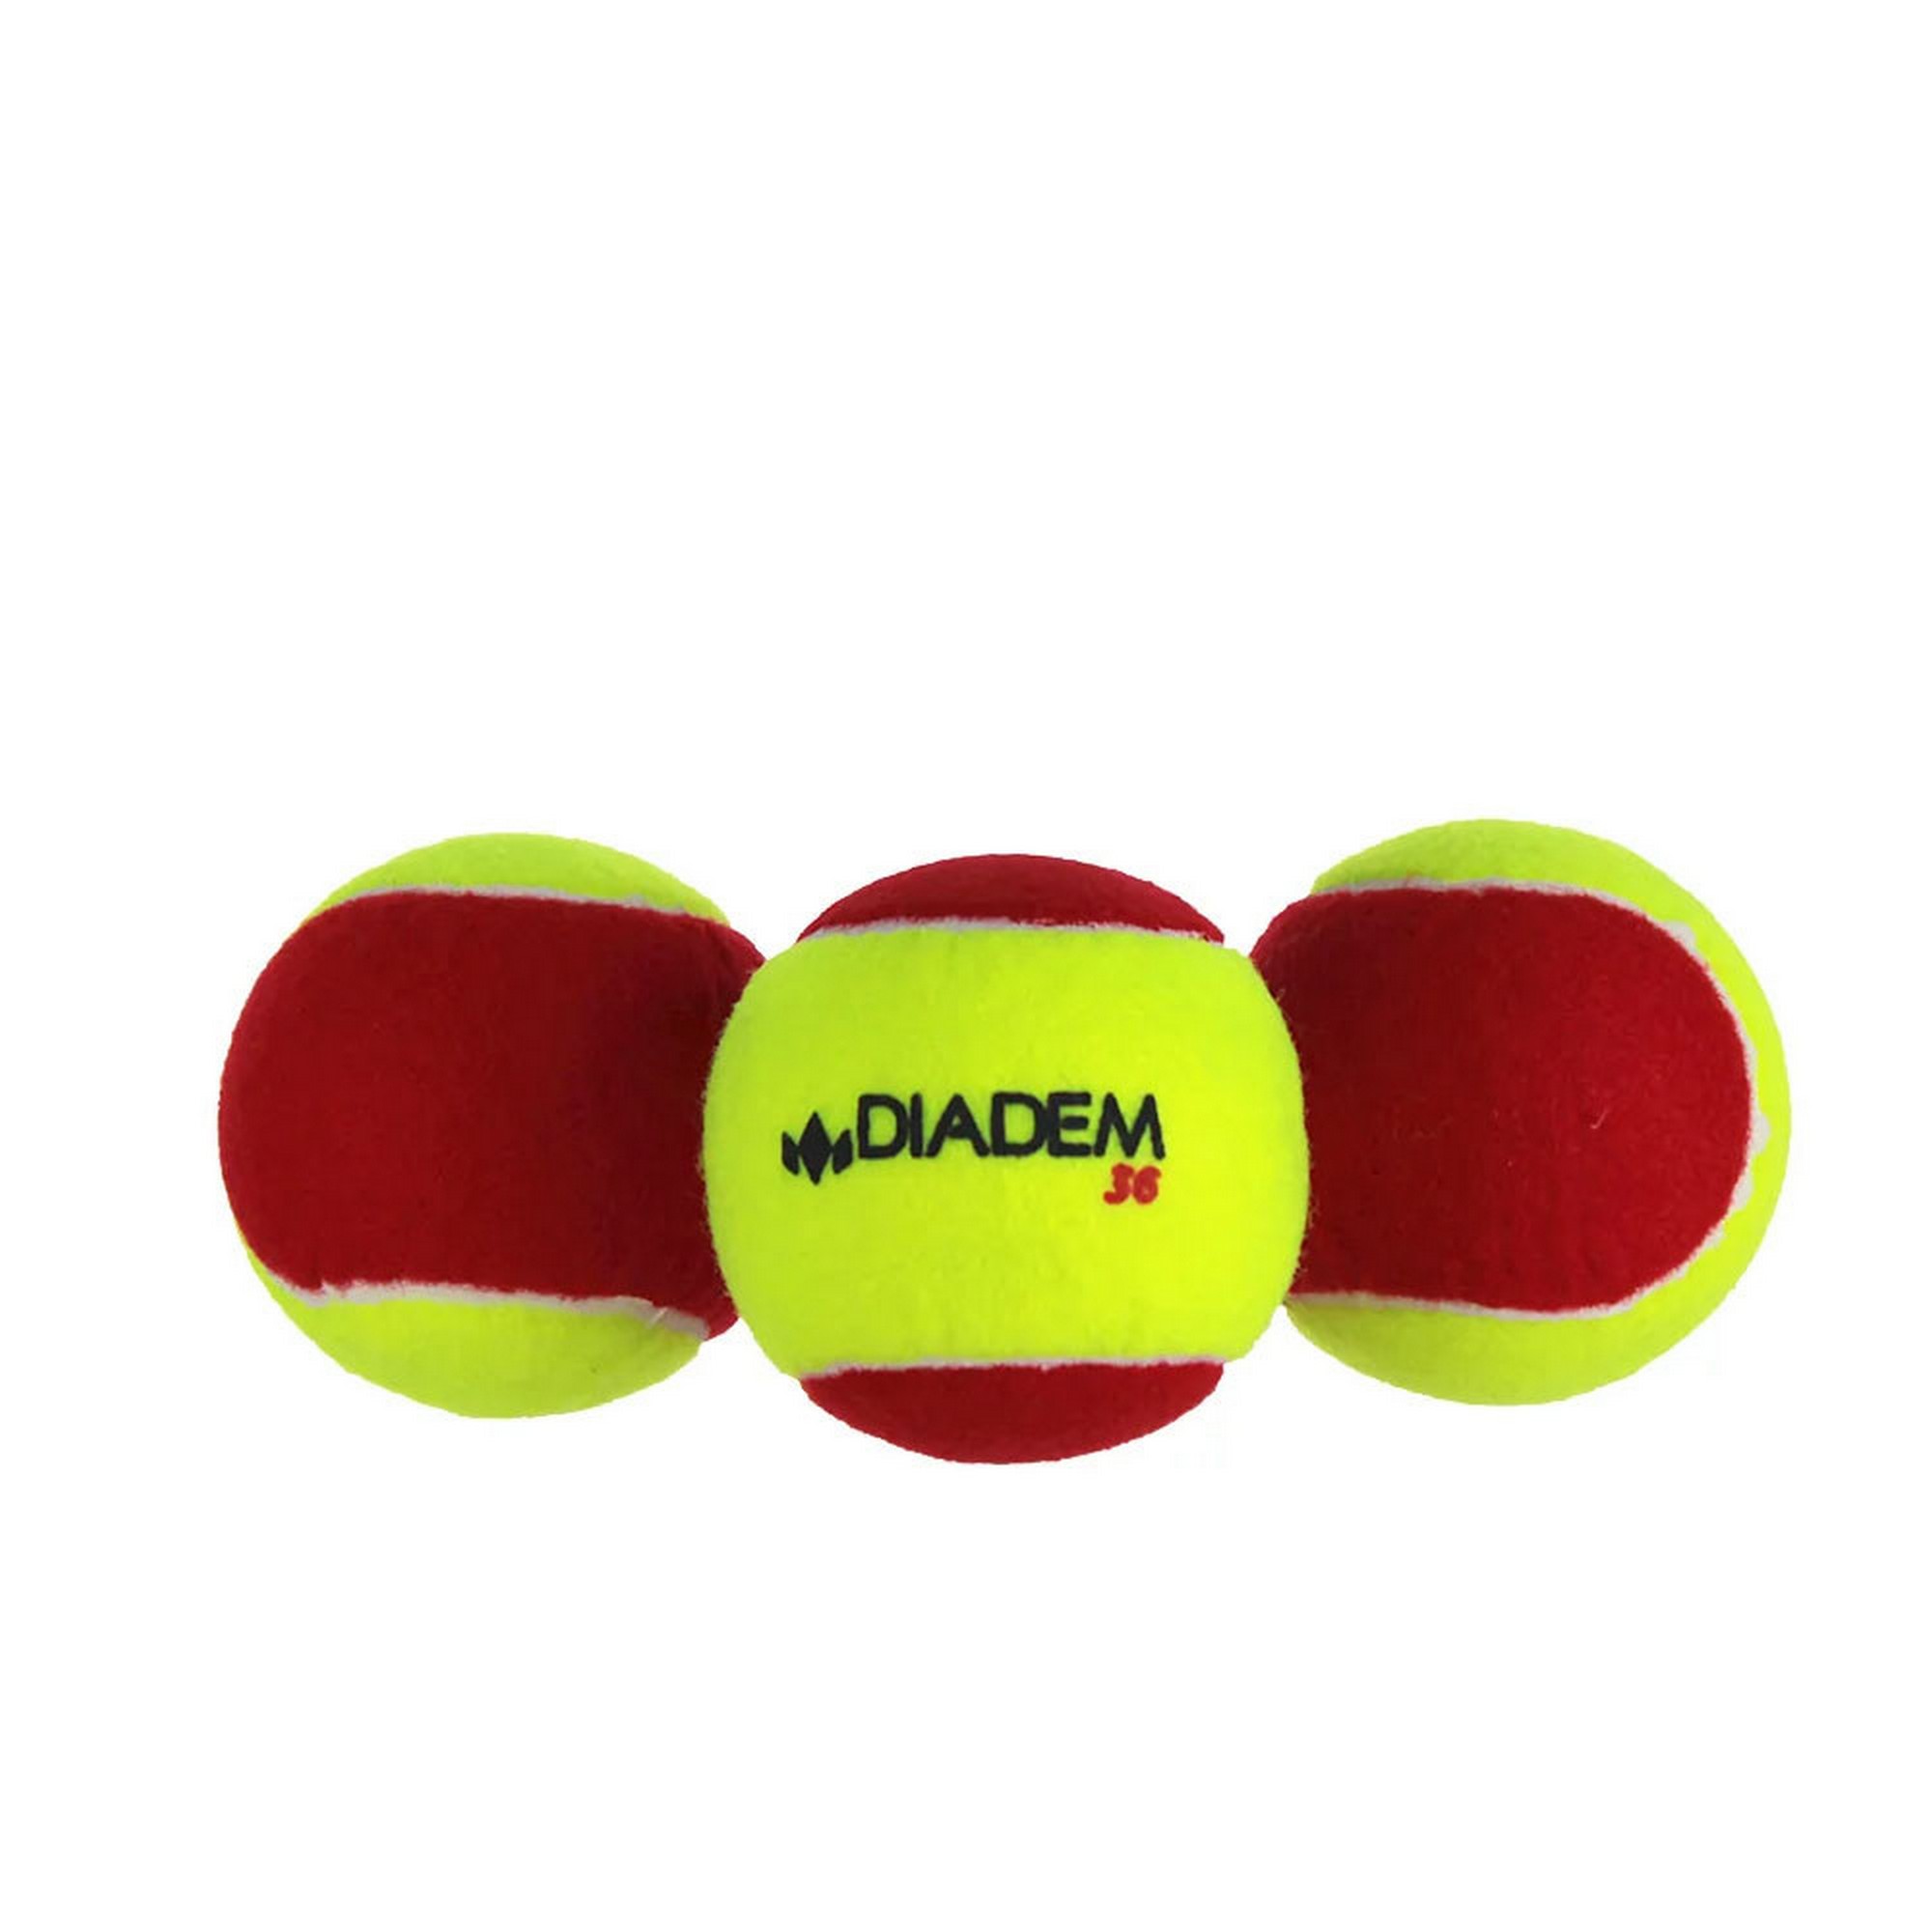 фото Мяч теннисный детский diadem stage 3 red ball 3шт, фетр ball-case-red желто-красный